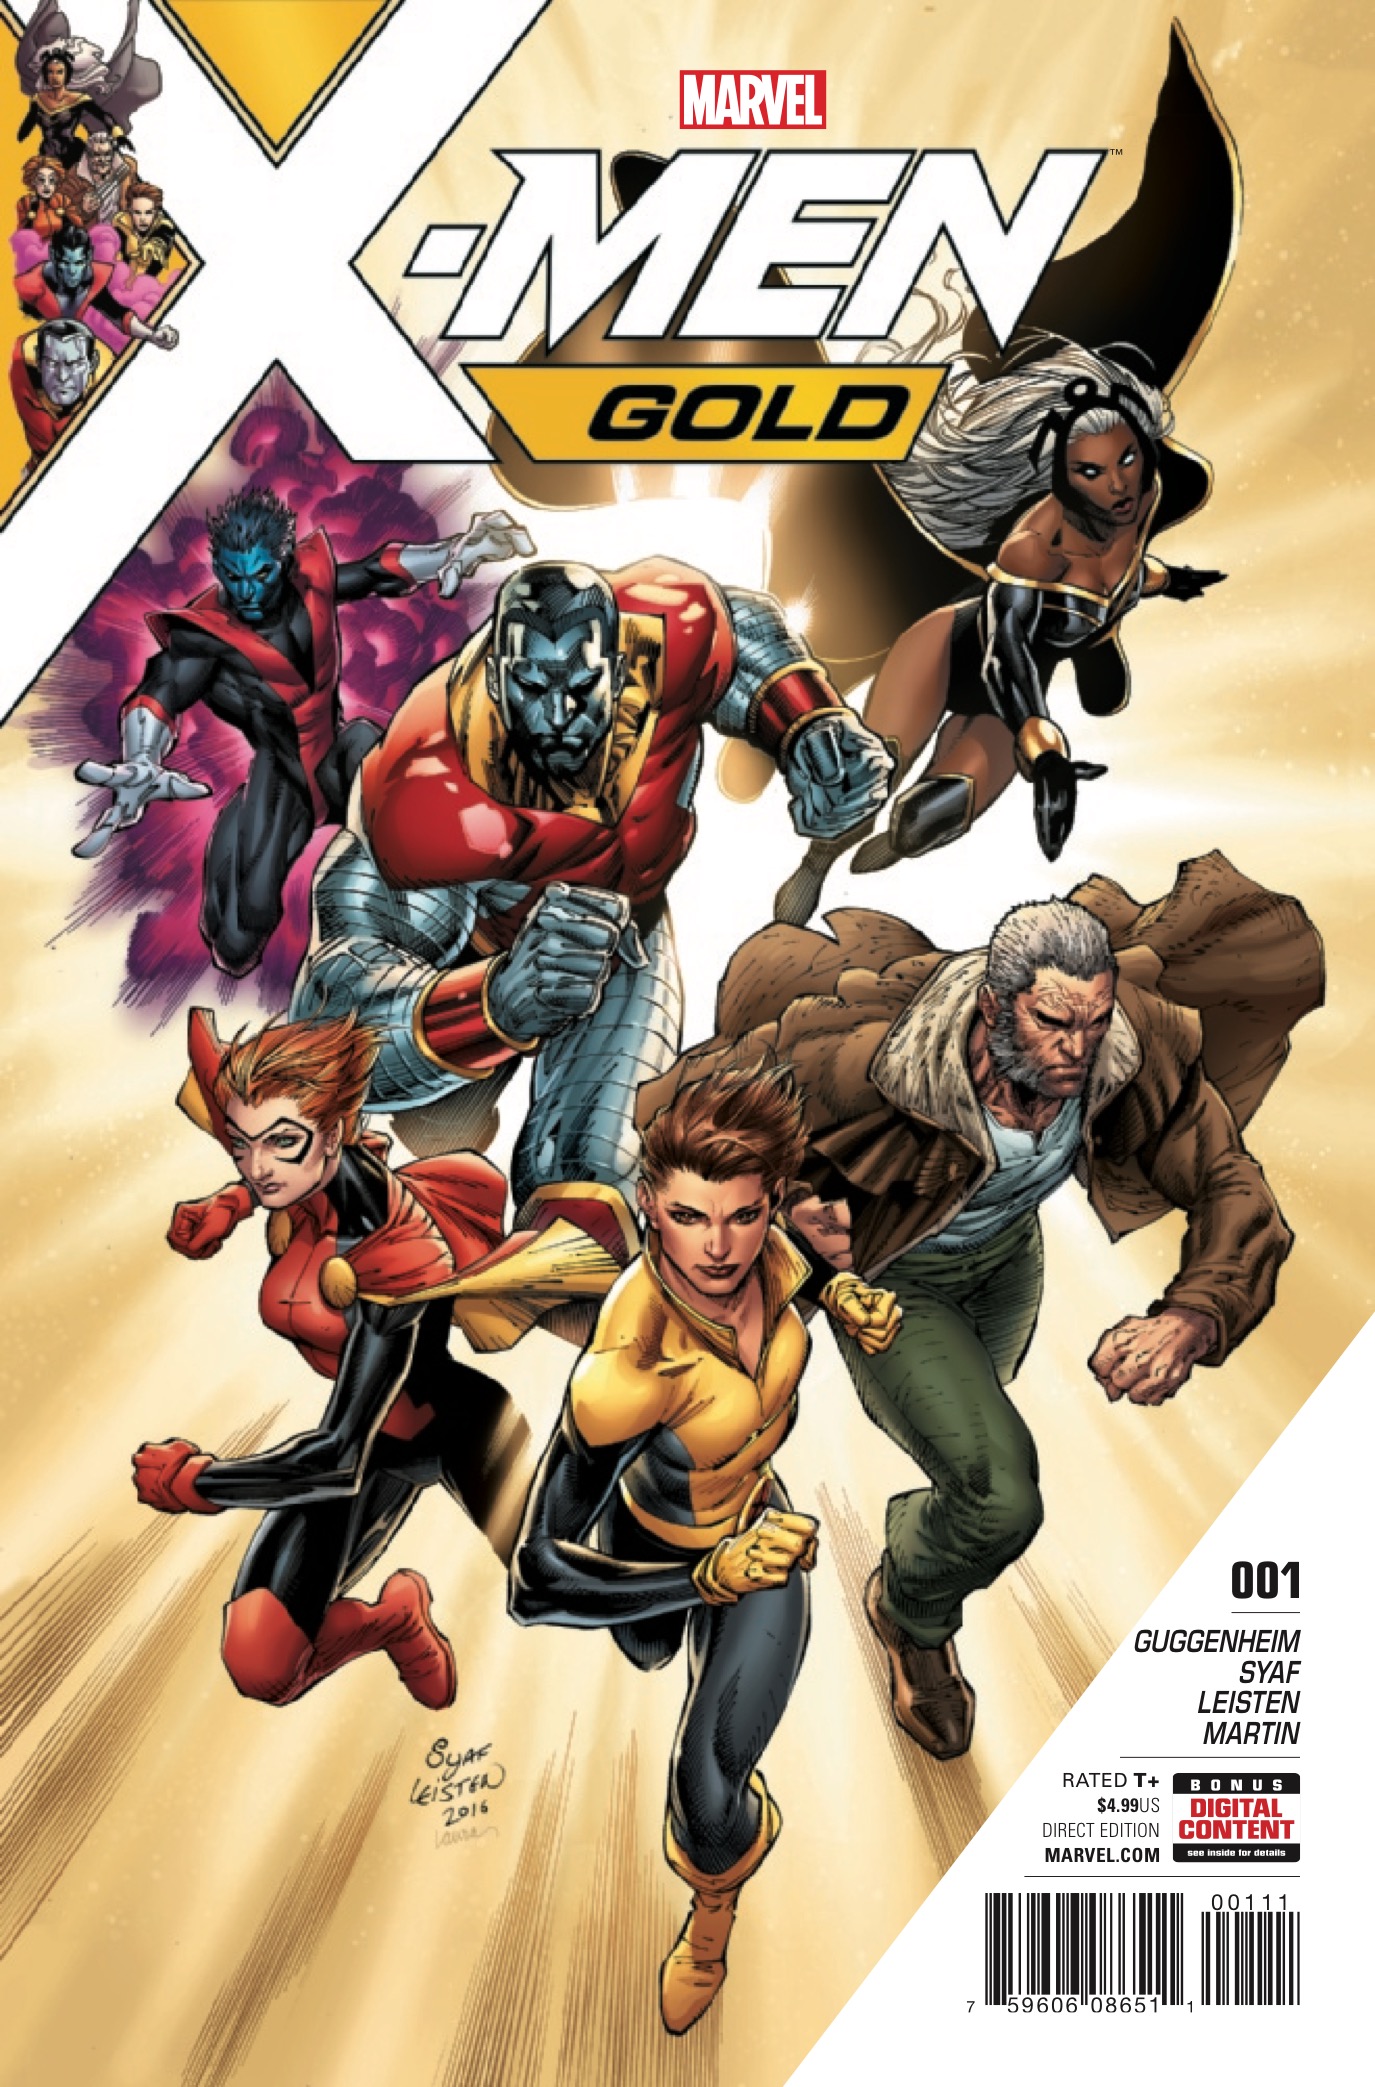 X-Men Gold #1 Review